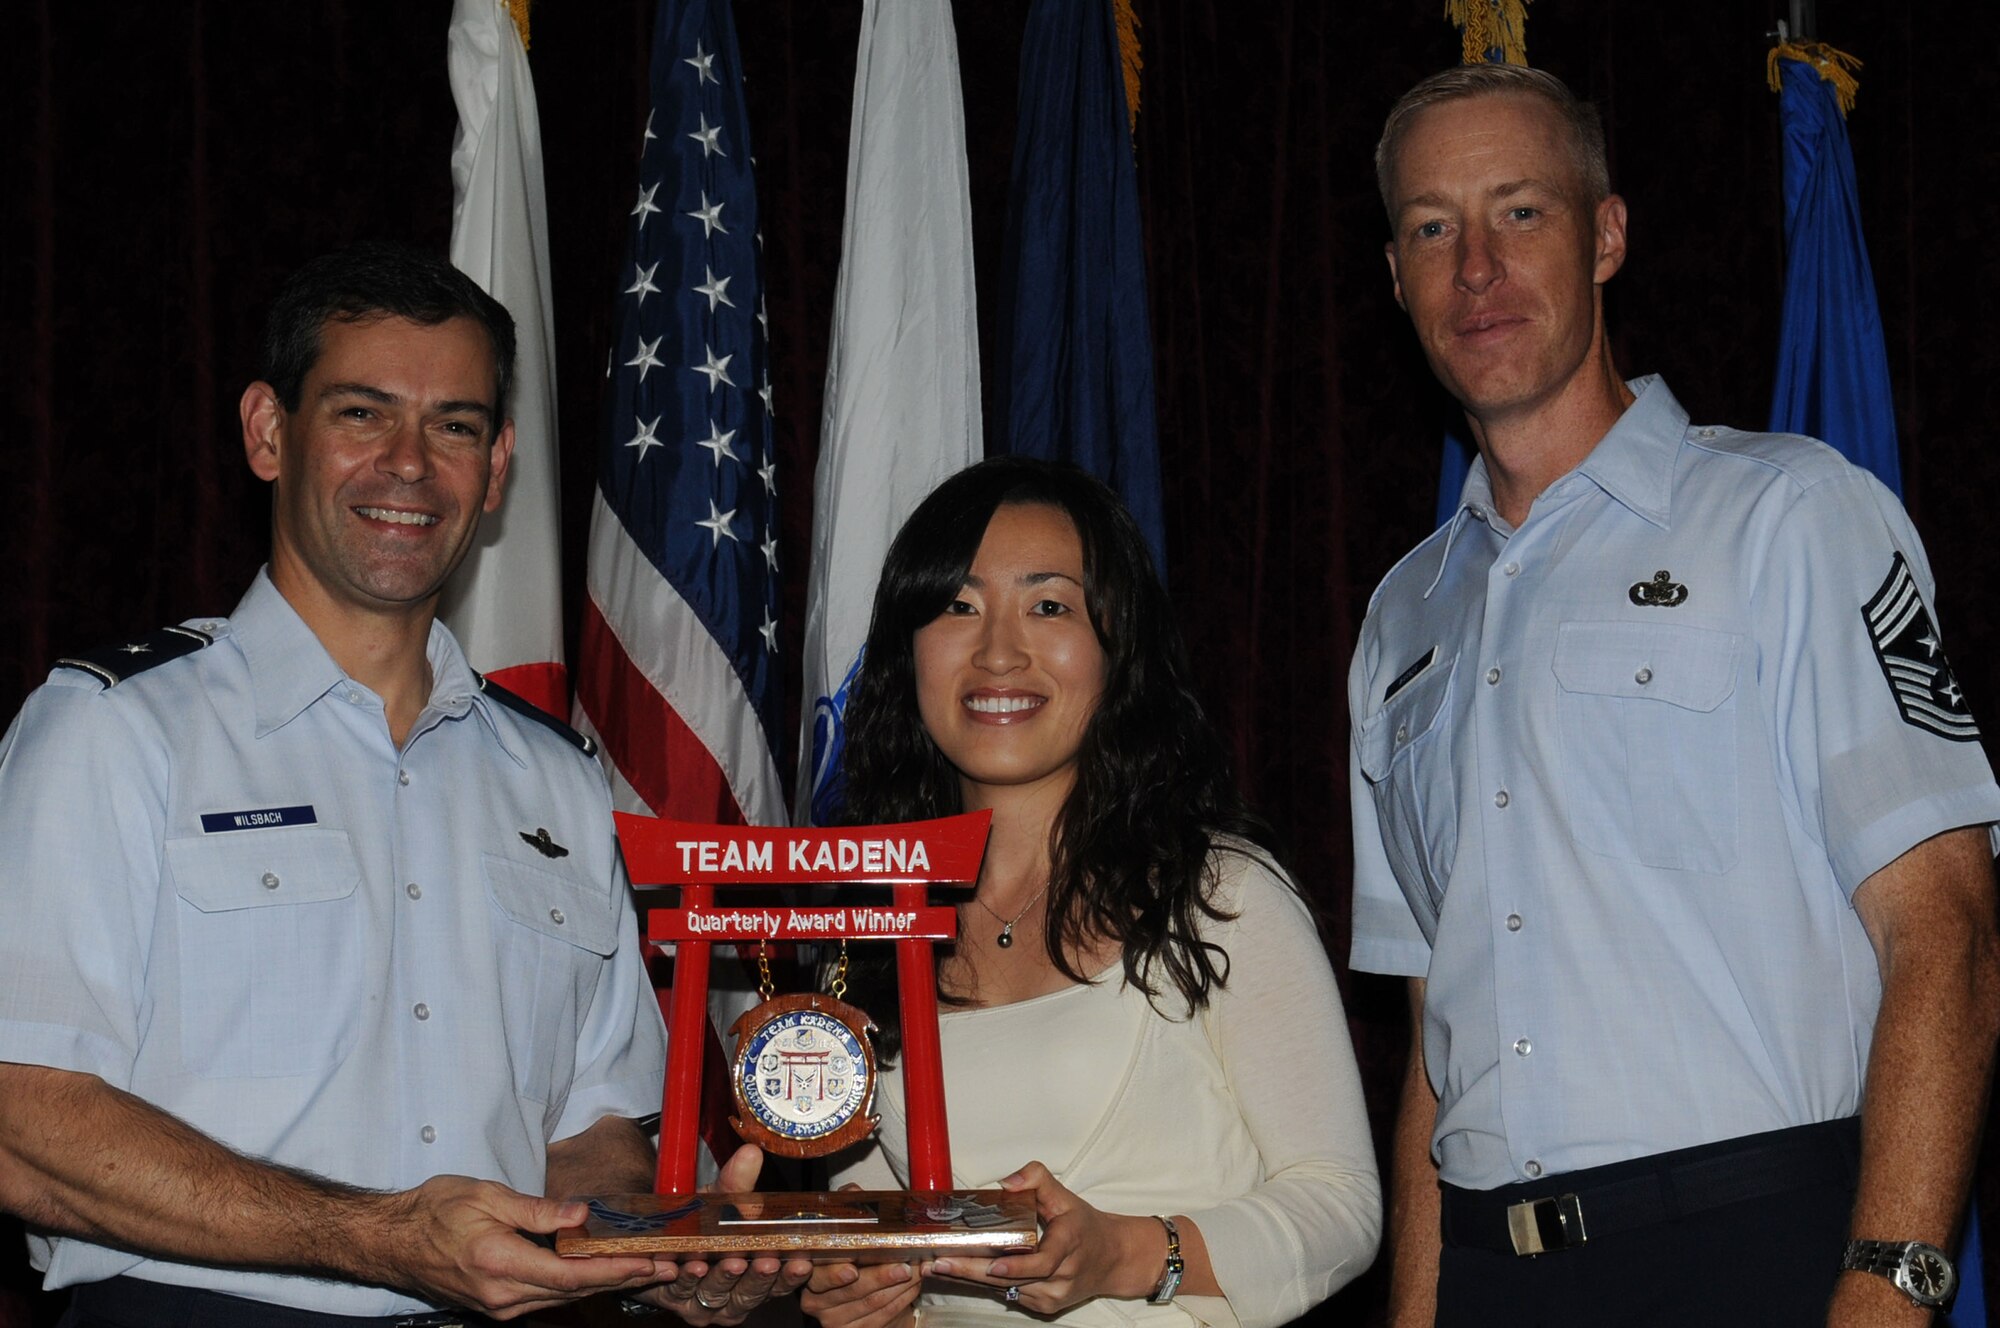 Jane Chung, 718th Civil Engineer Squadron, was named the Team Kadena Category II Civilian of the Quarter.